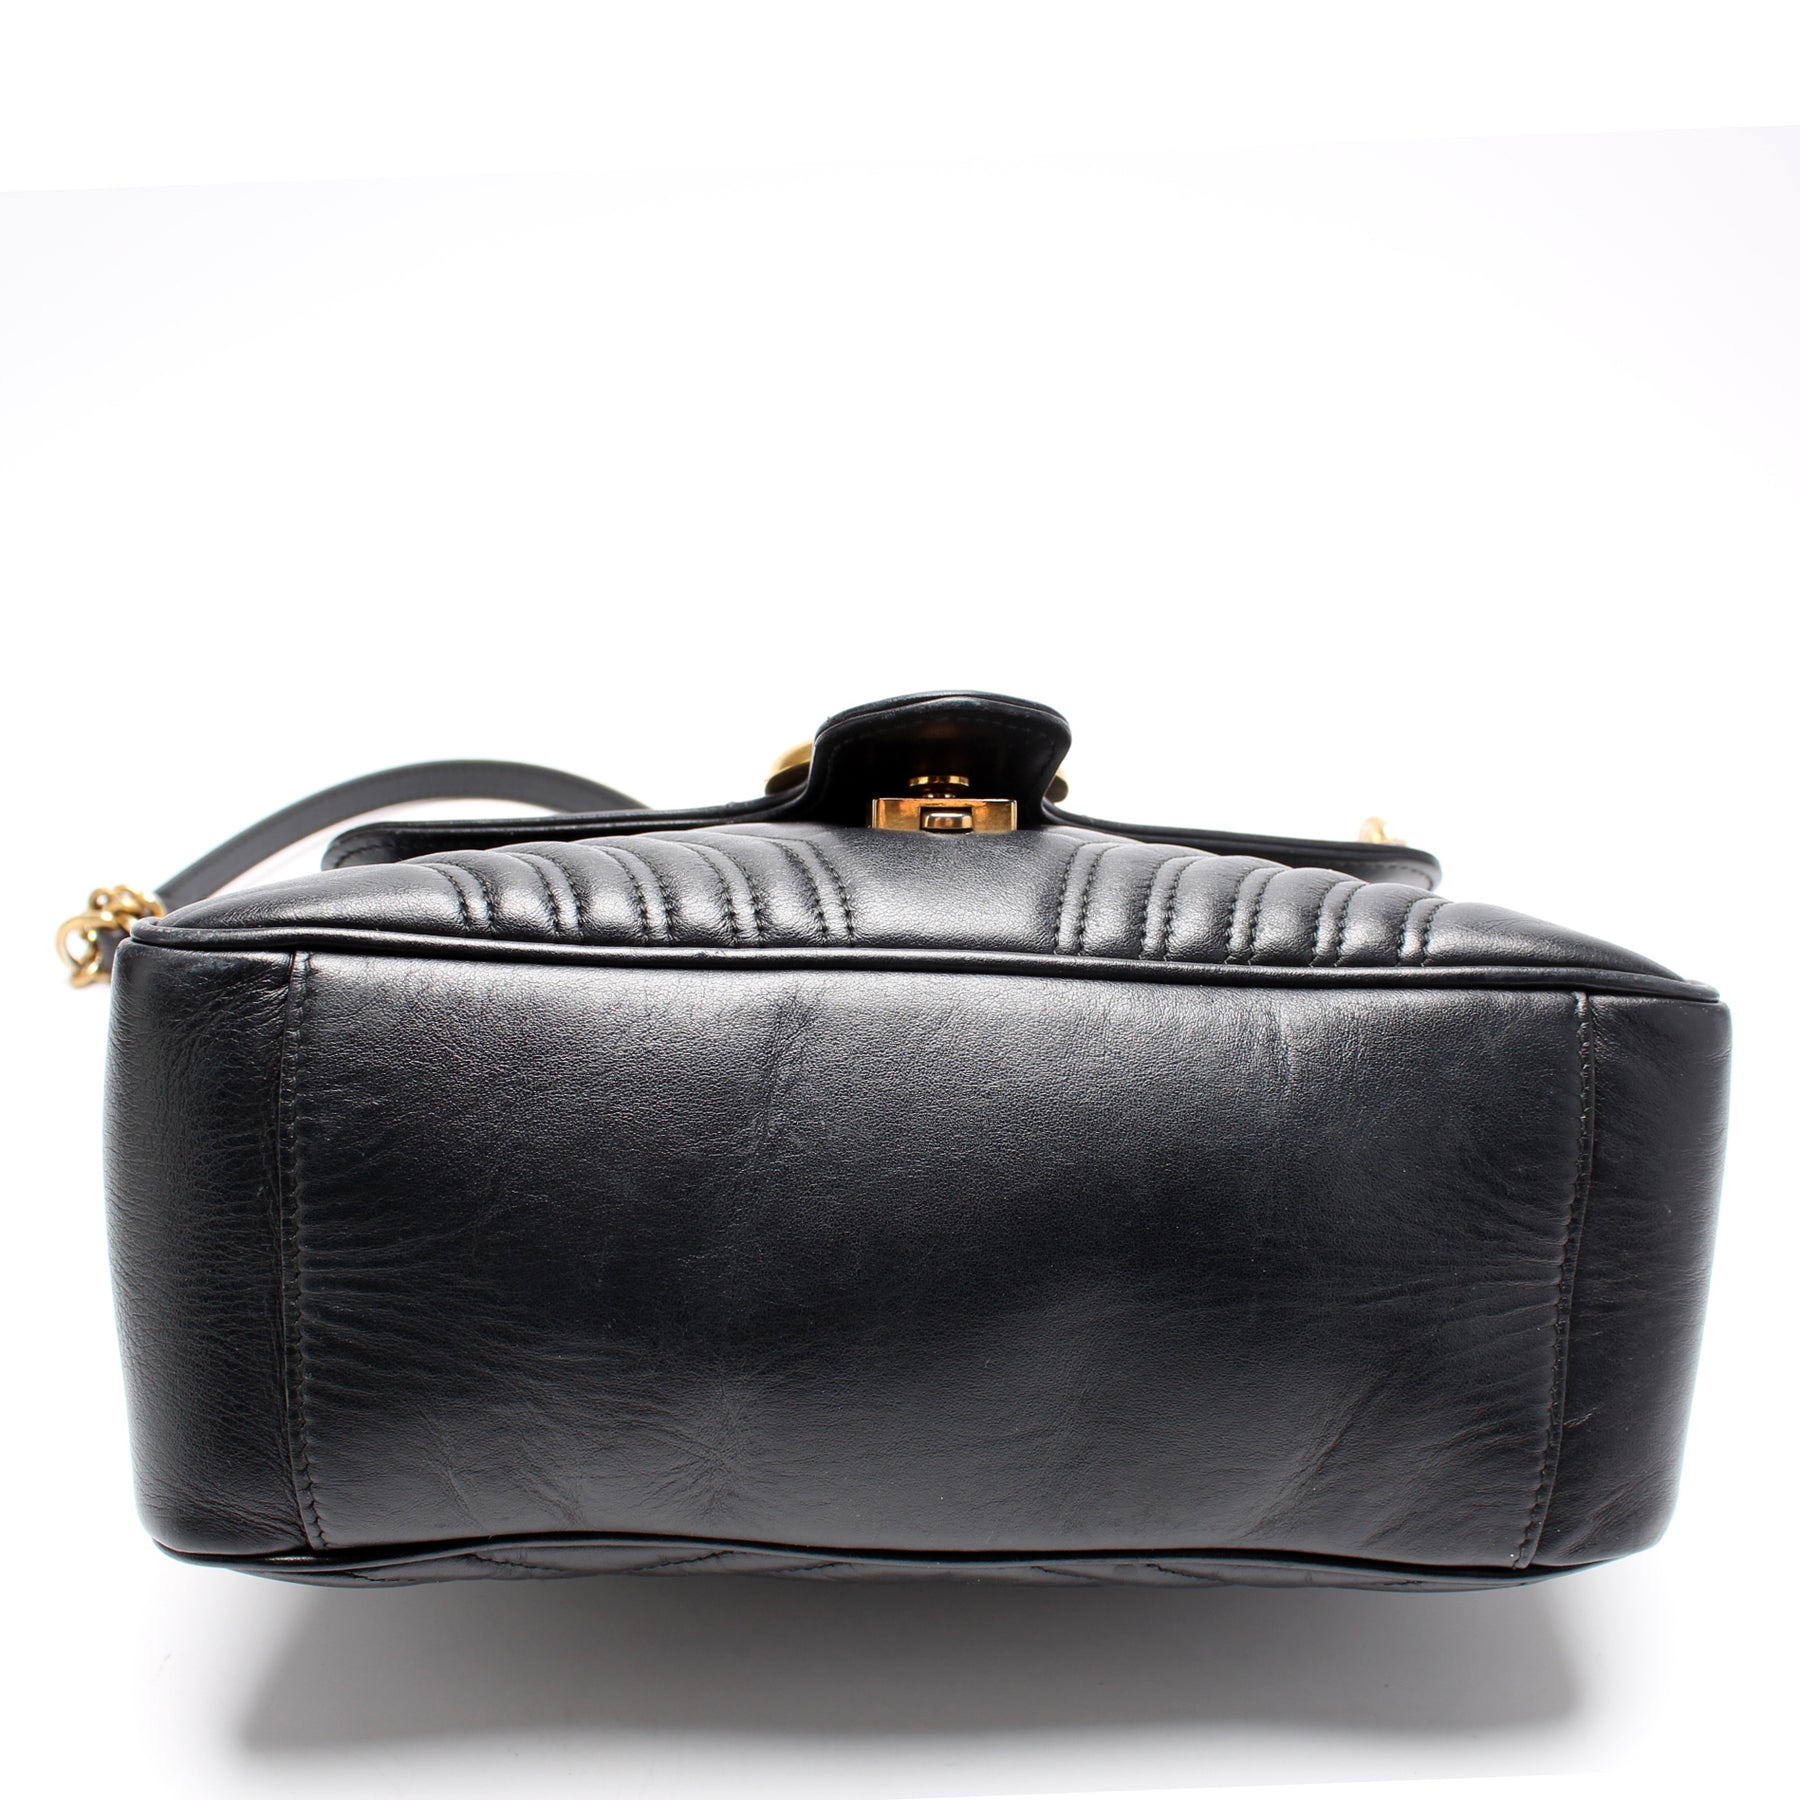 GUCCI GG Marmont Small Top Handle Shoulder Bag Cream 498110